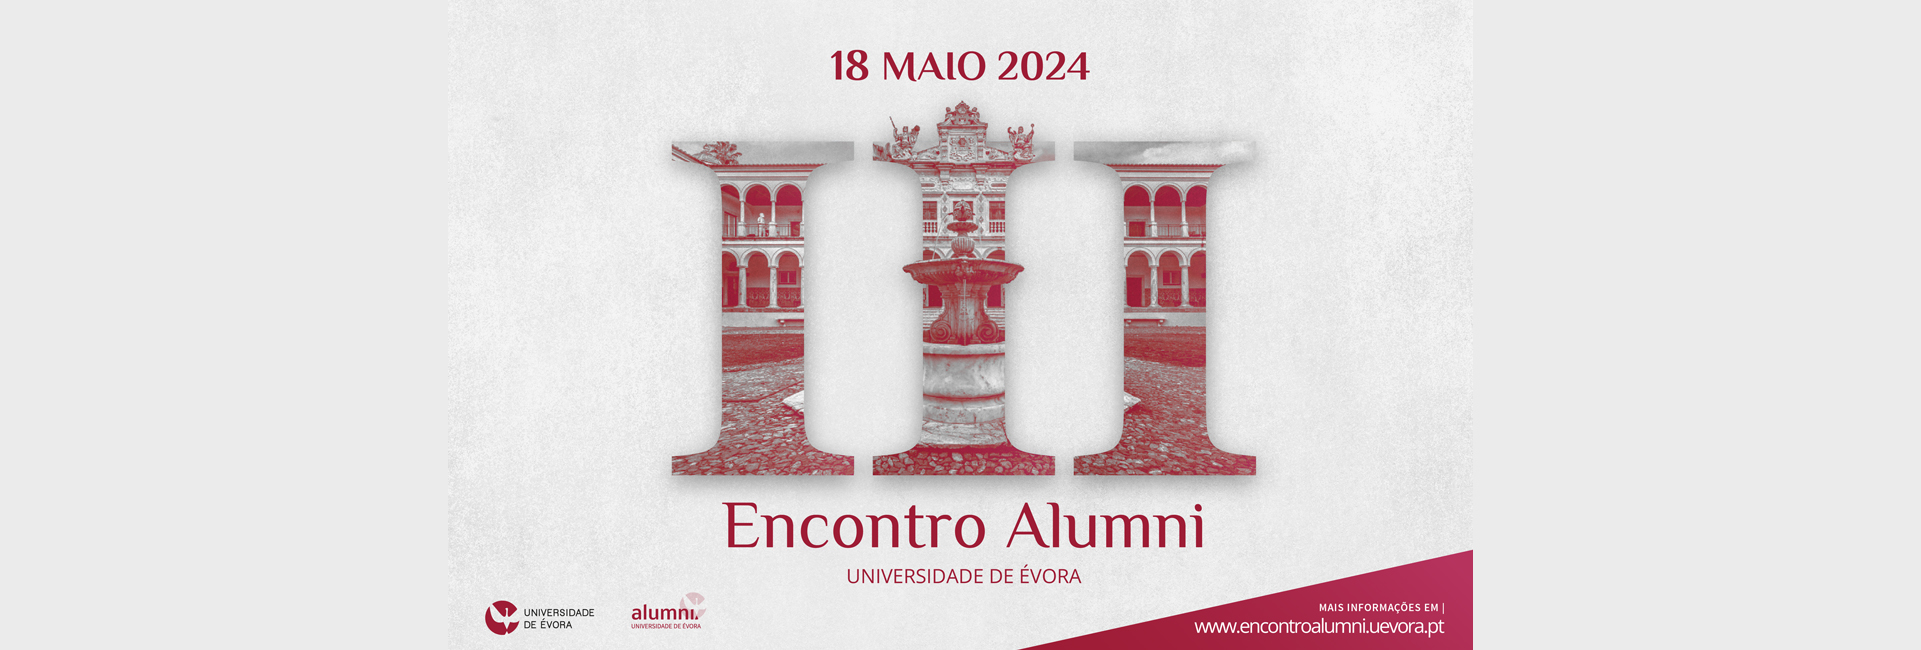 III Encontro Alumni da Universidade de Évora